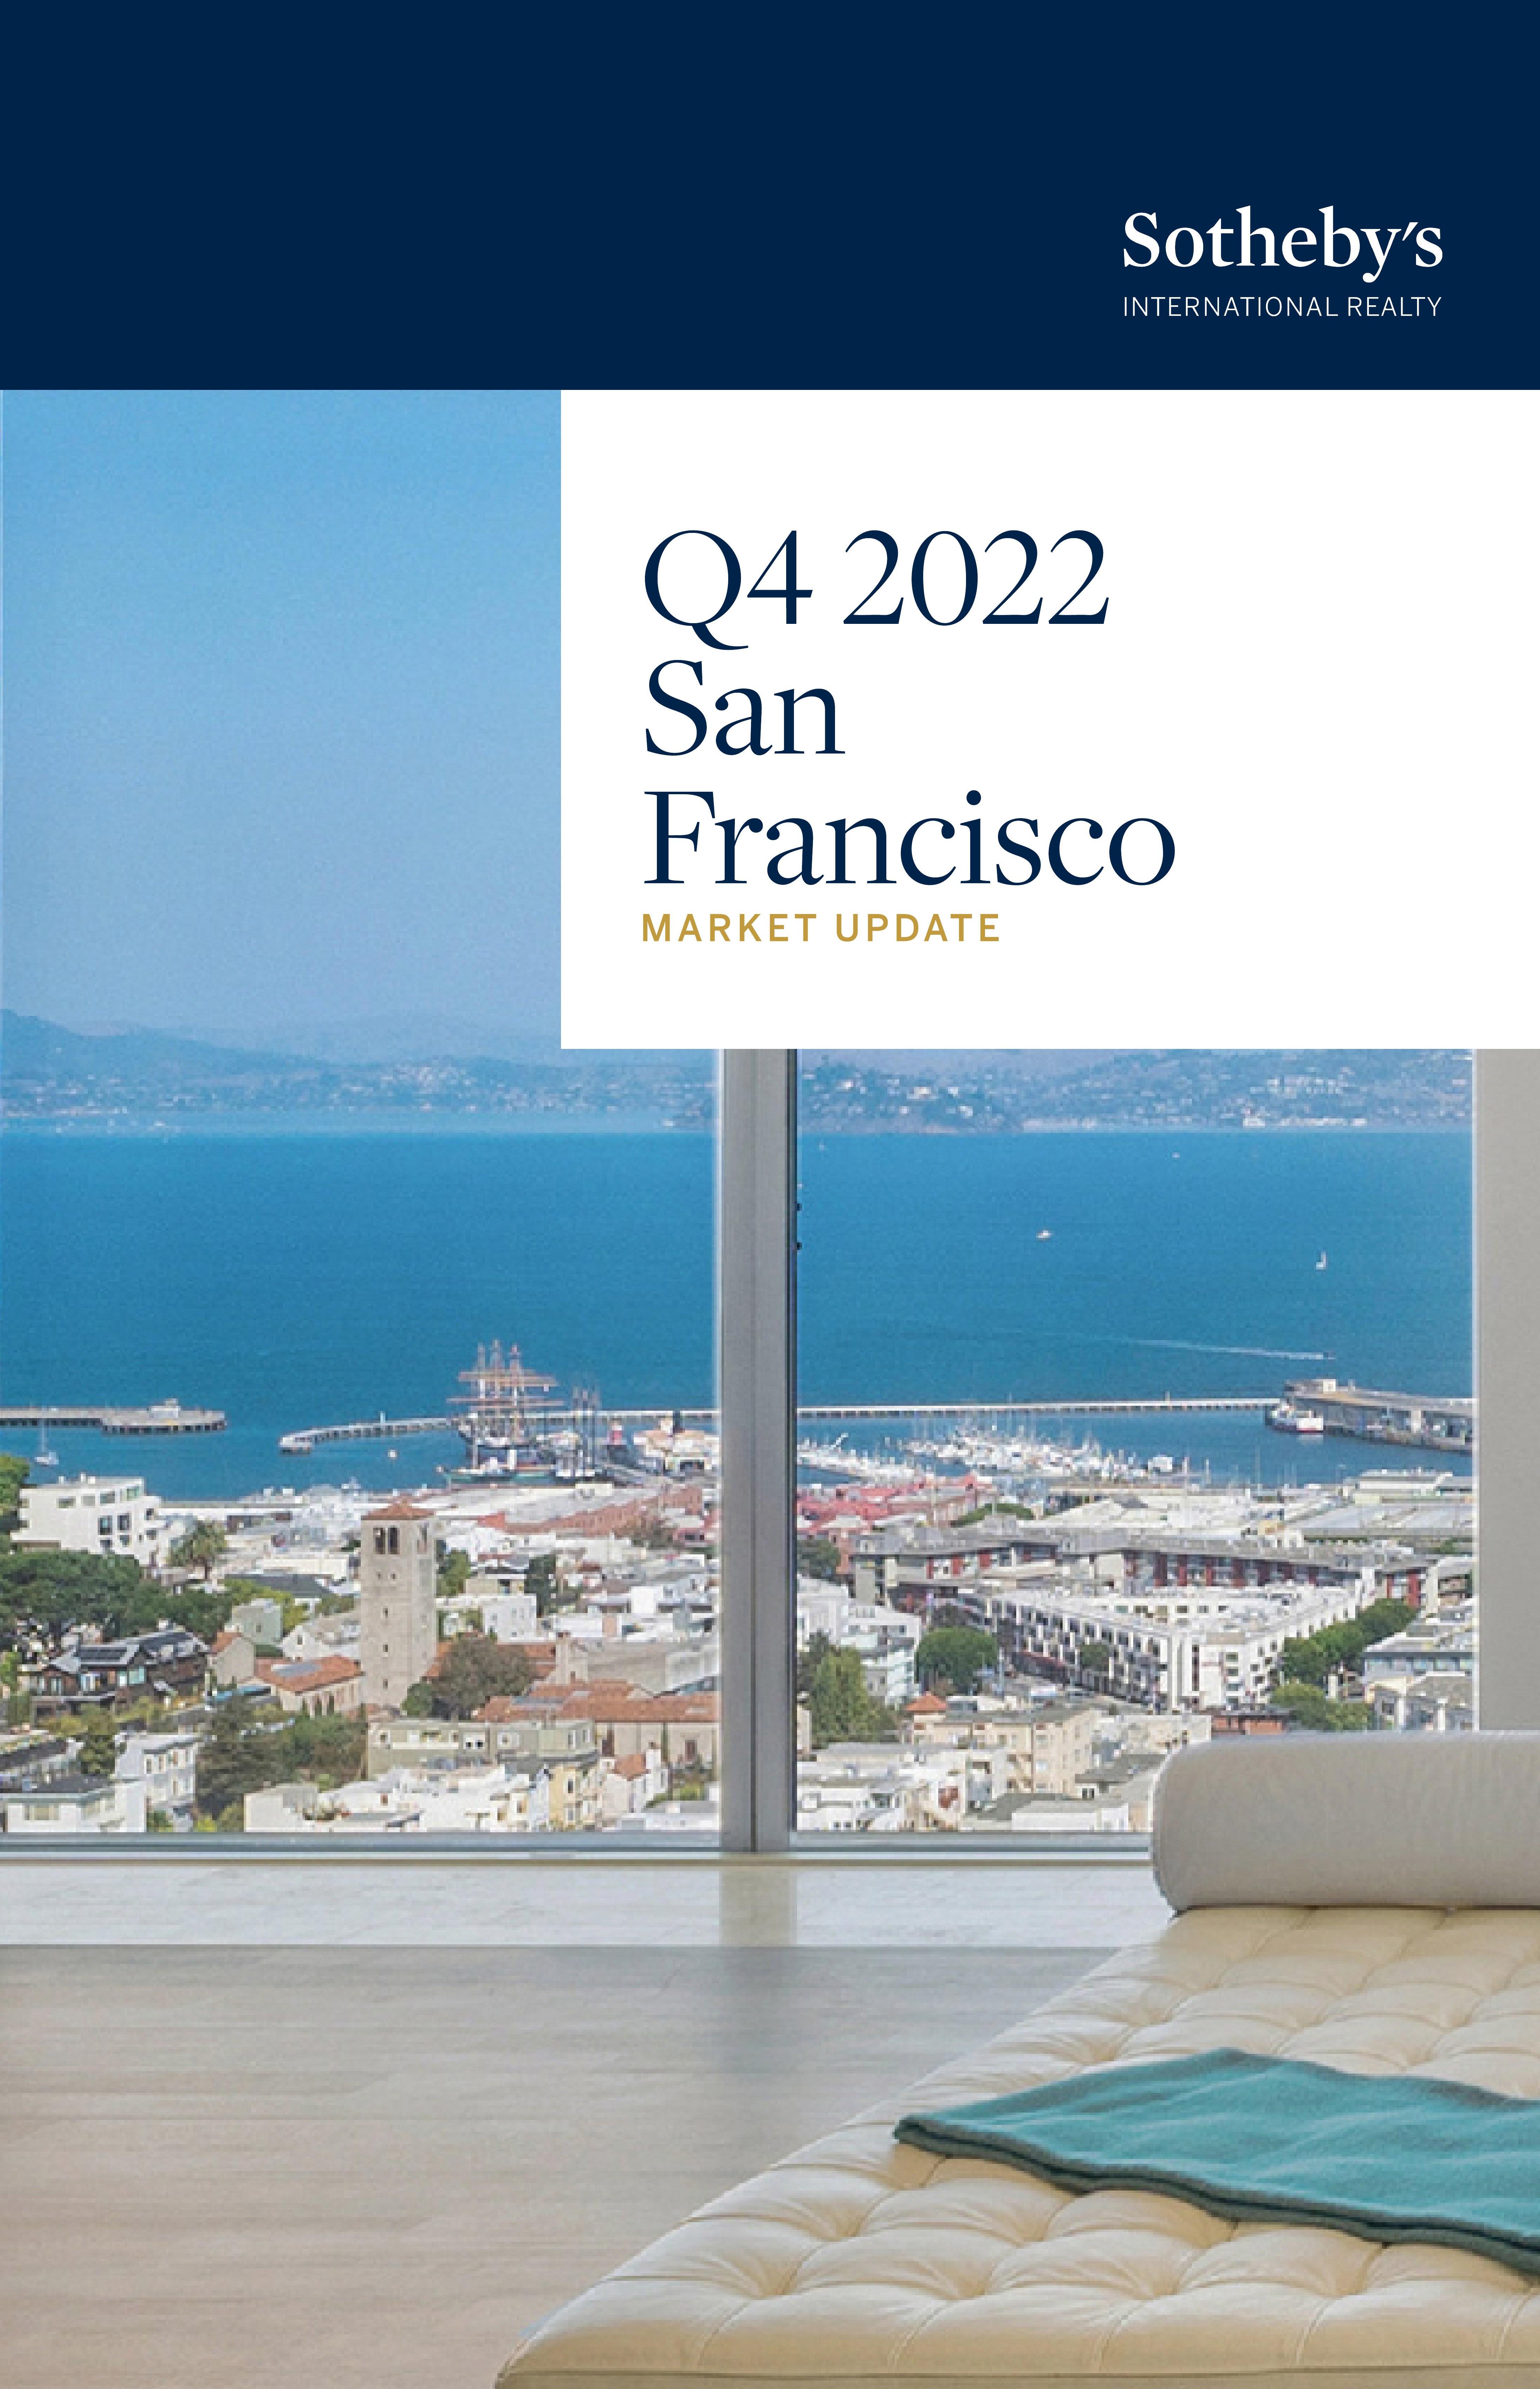 Explore the Q4 2022 San Francisco Market Update